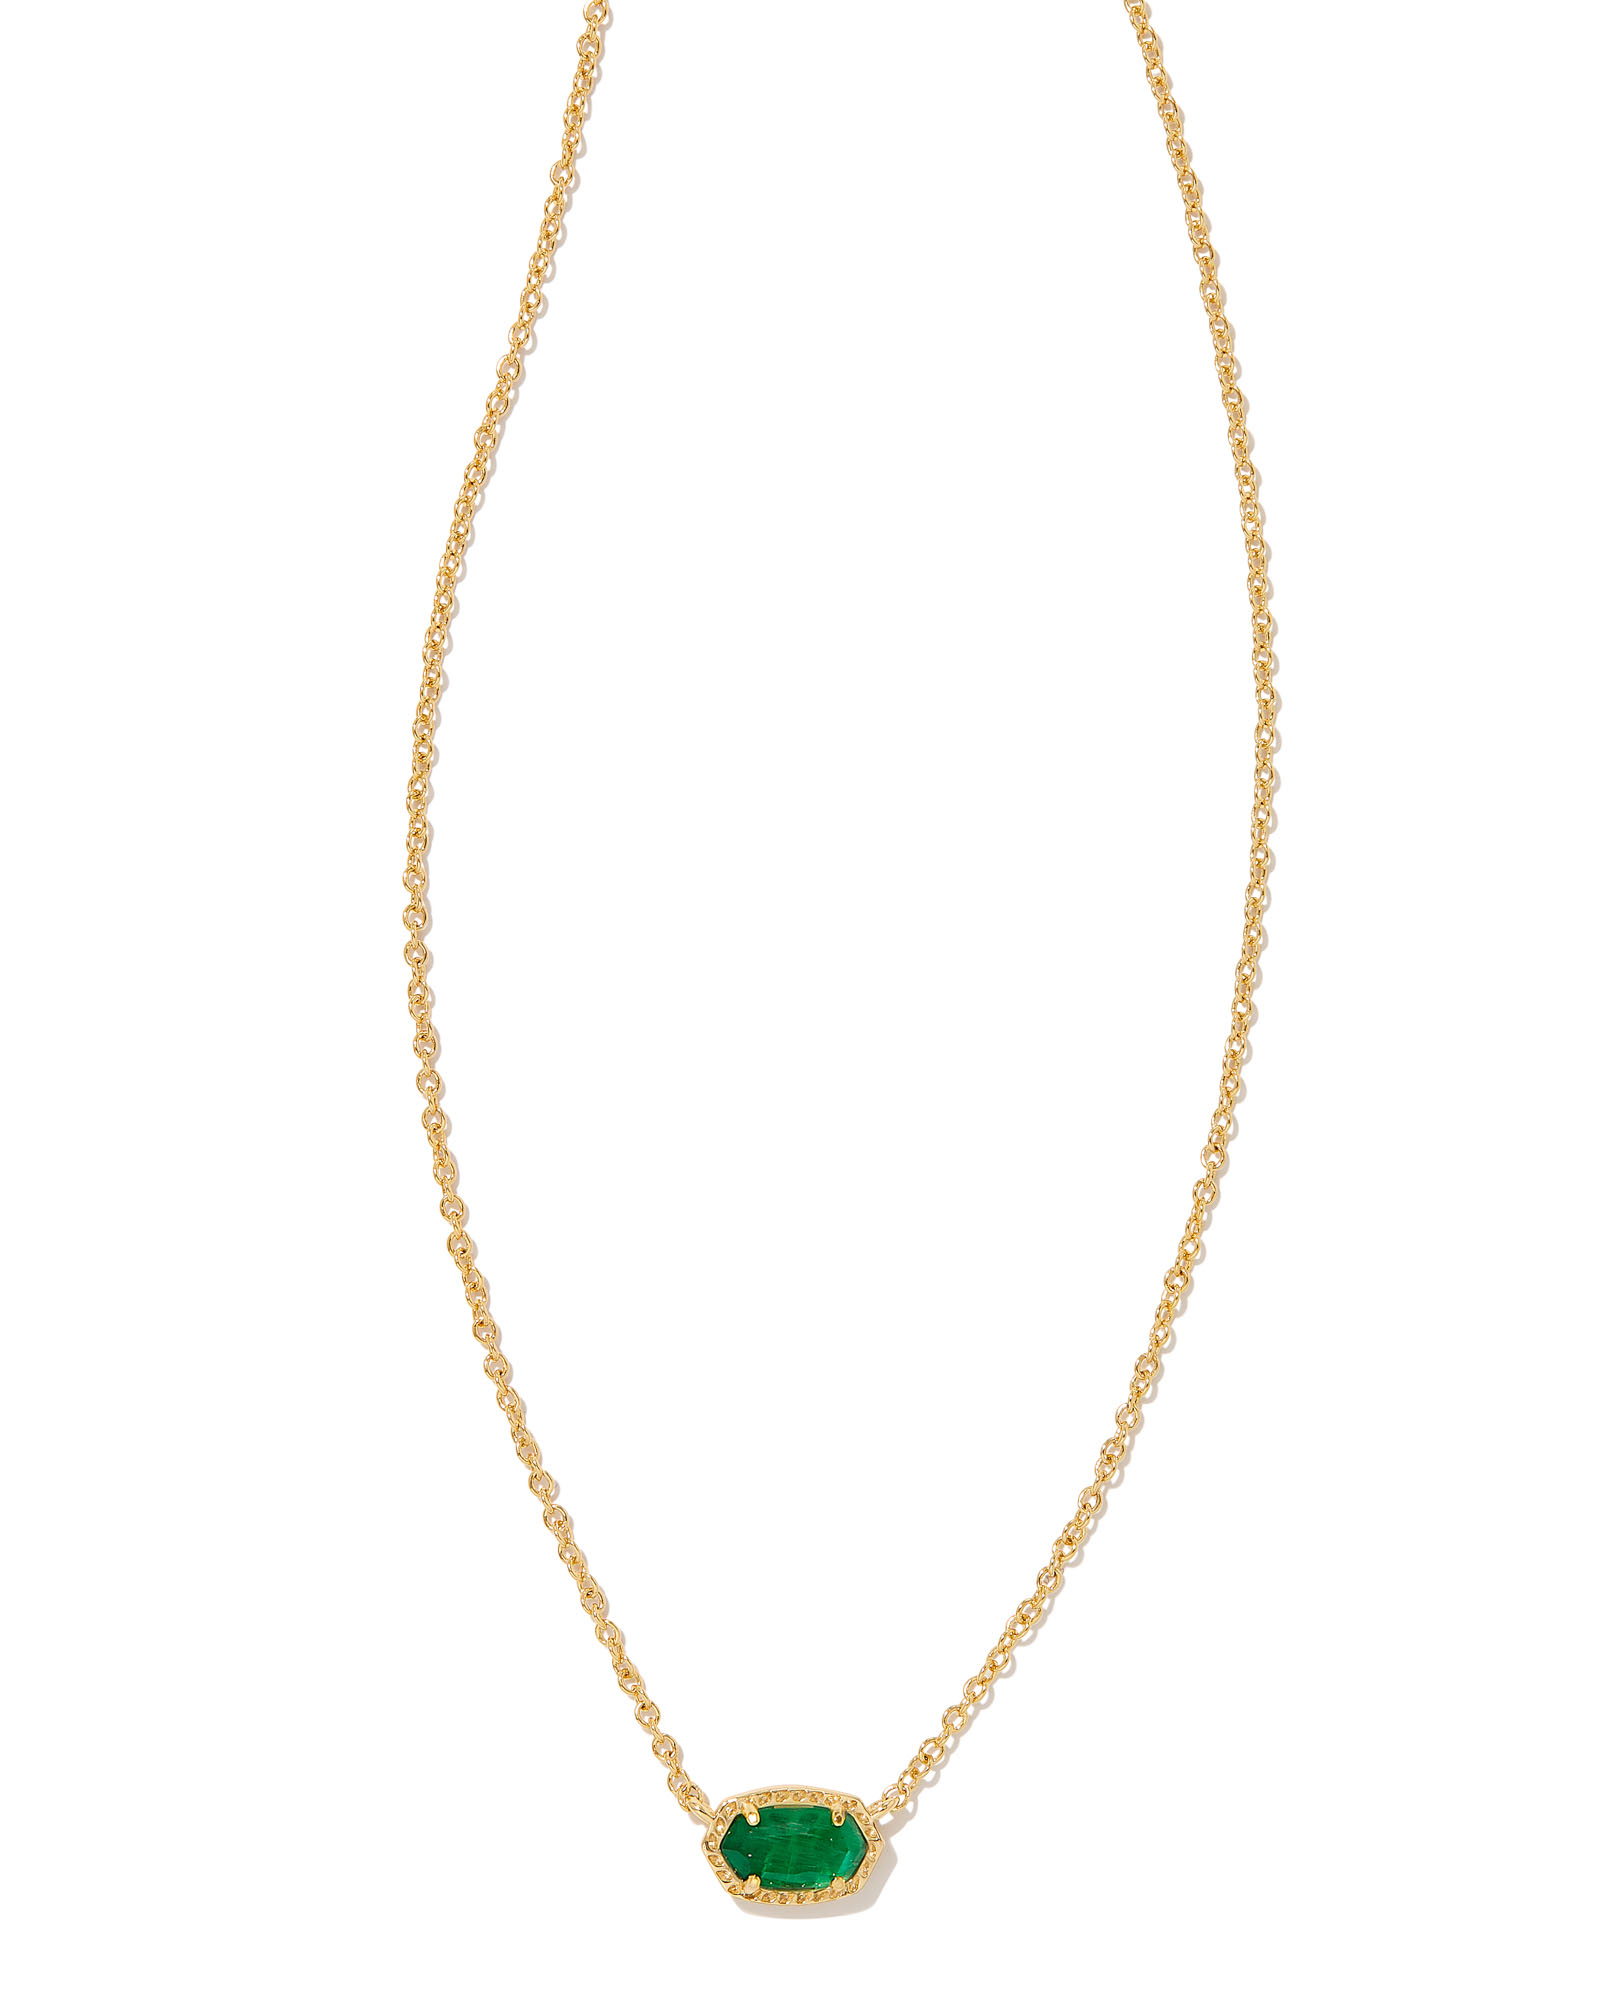 Elisa Multi Strand Necklace in 18k Yellow Gold Vermeil | Kendra Scott